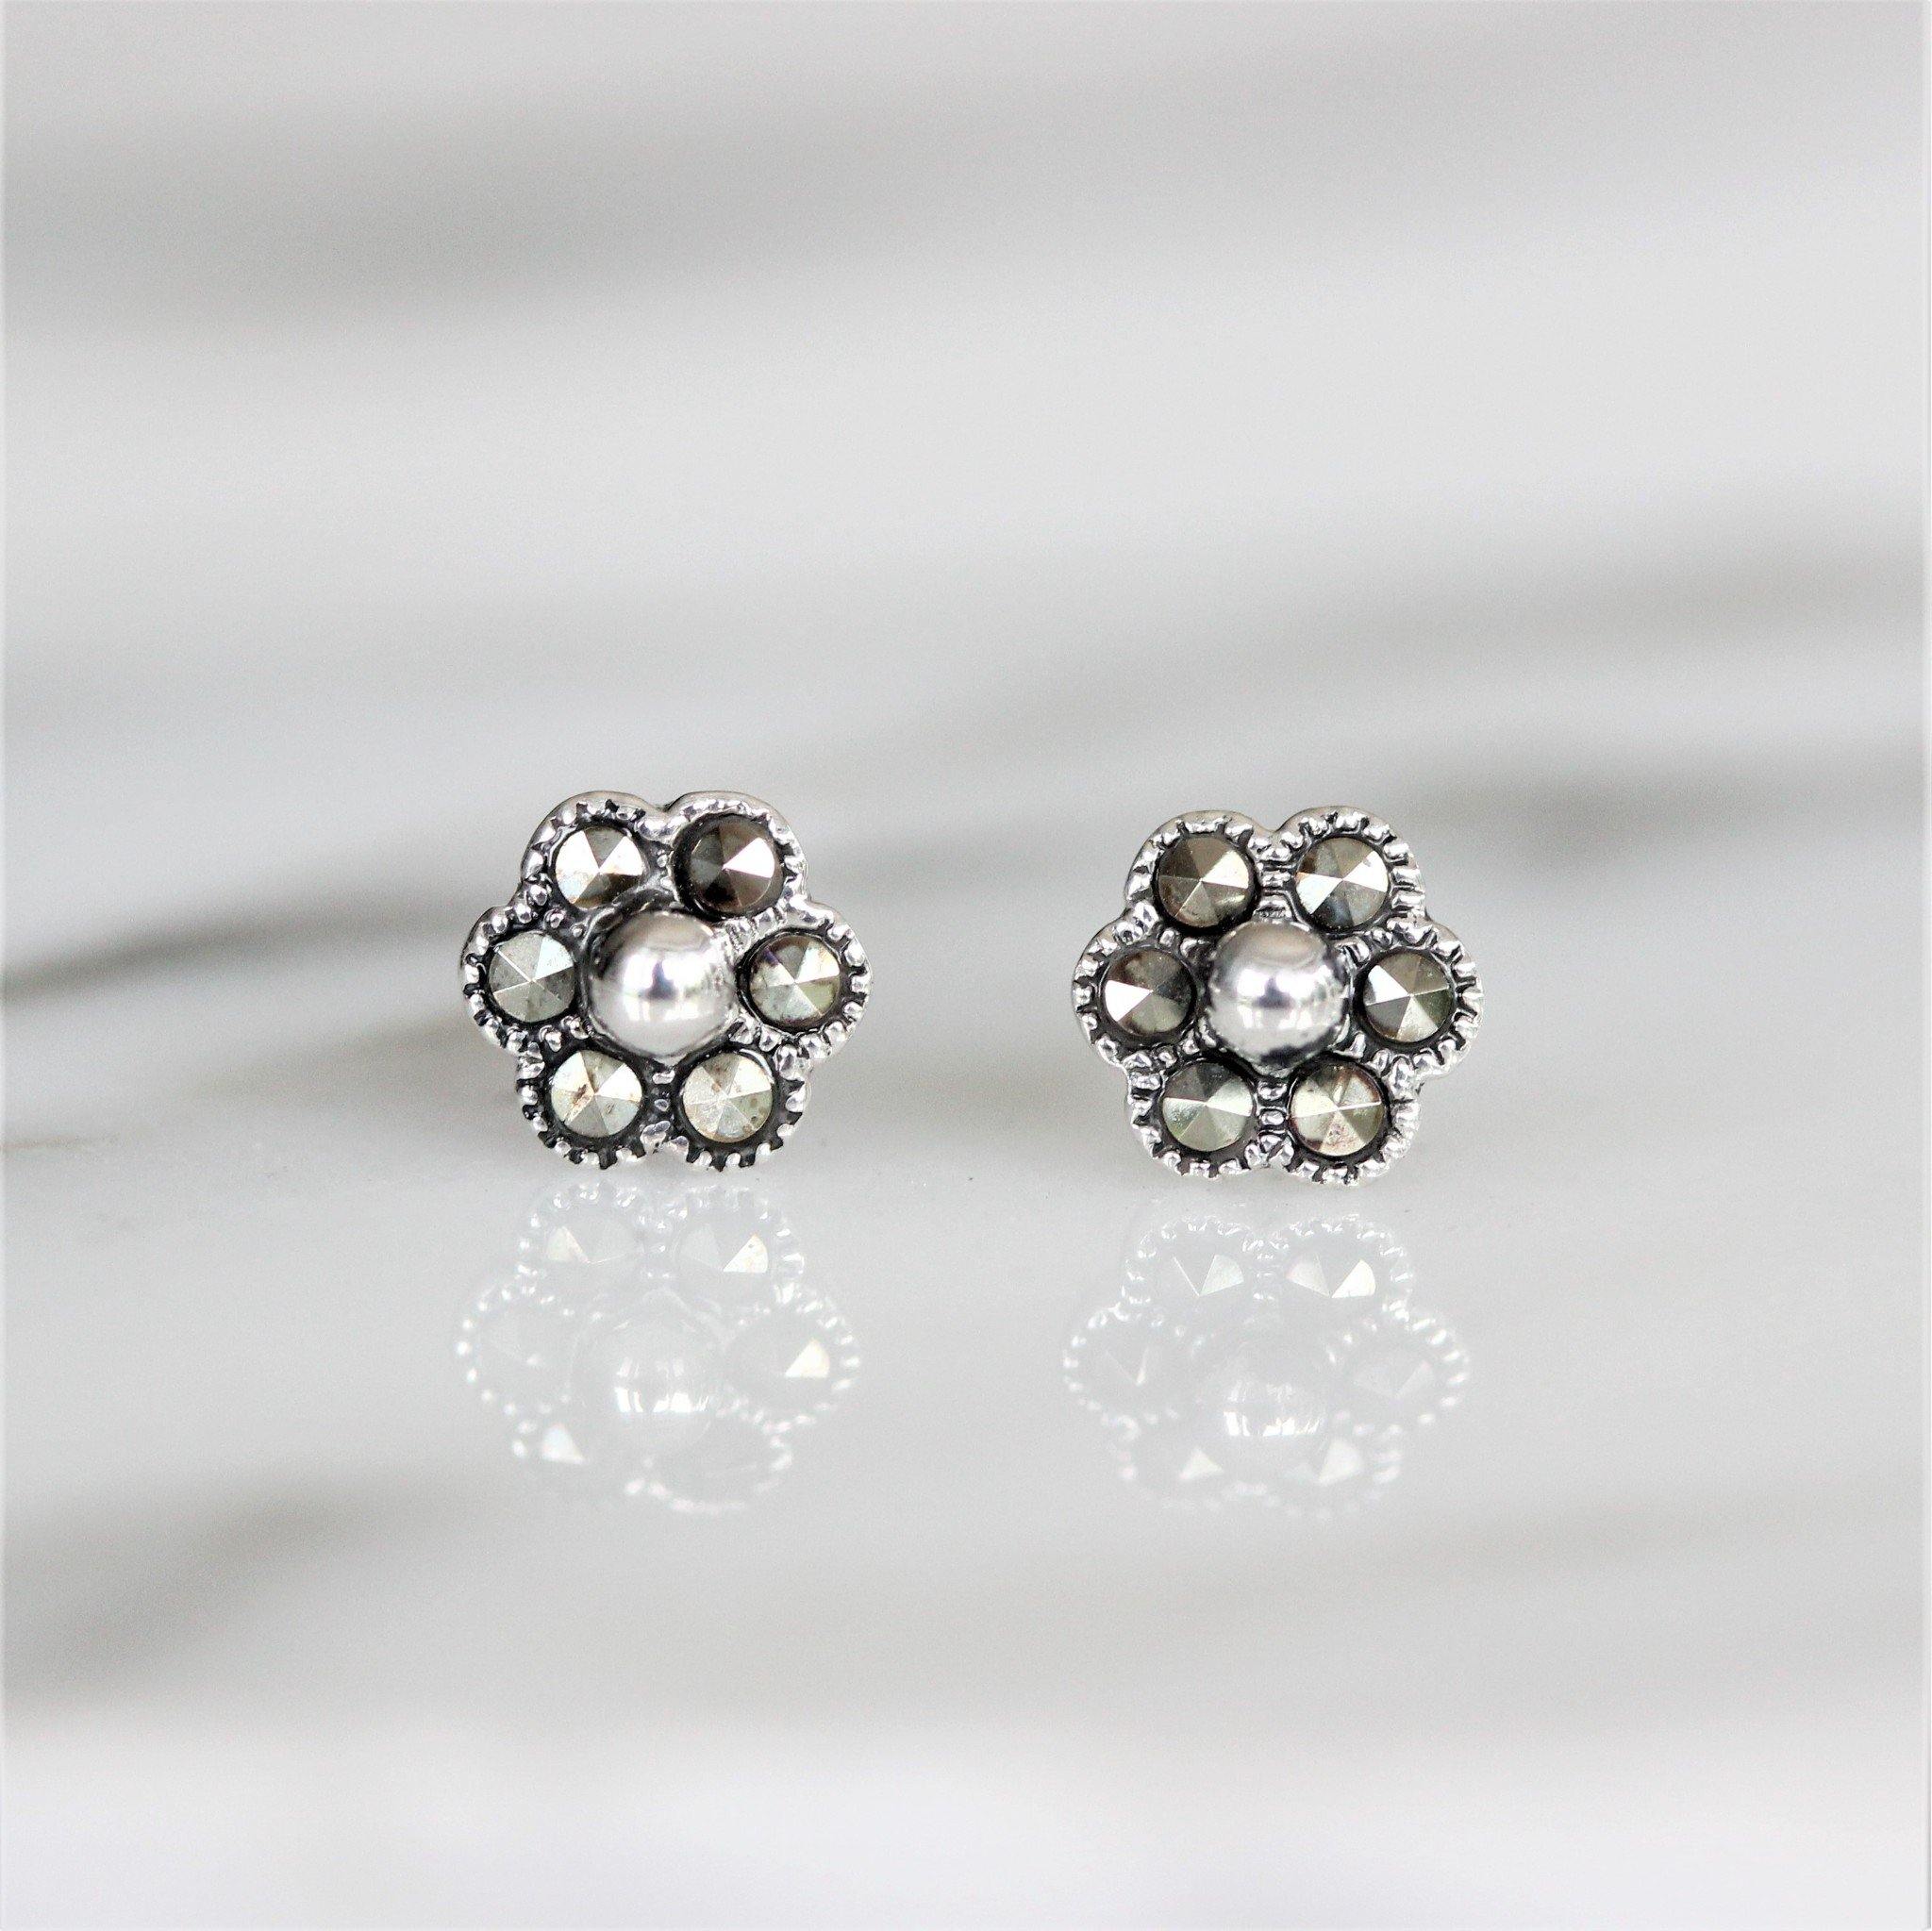 Sterling Silver Vintage Inspired Marcasite Small 5mm Flower Stud Earrings - STERLING SILVER DESIGNS